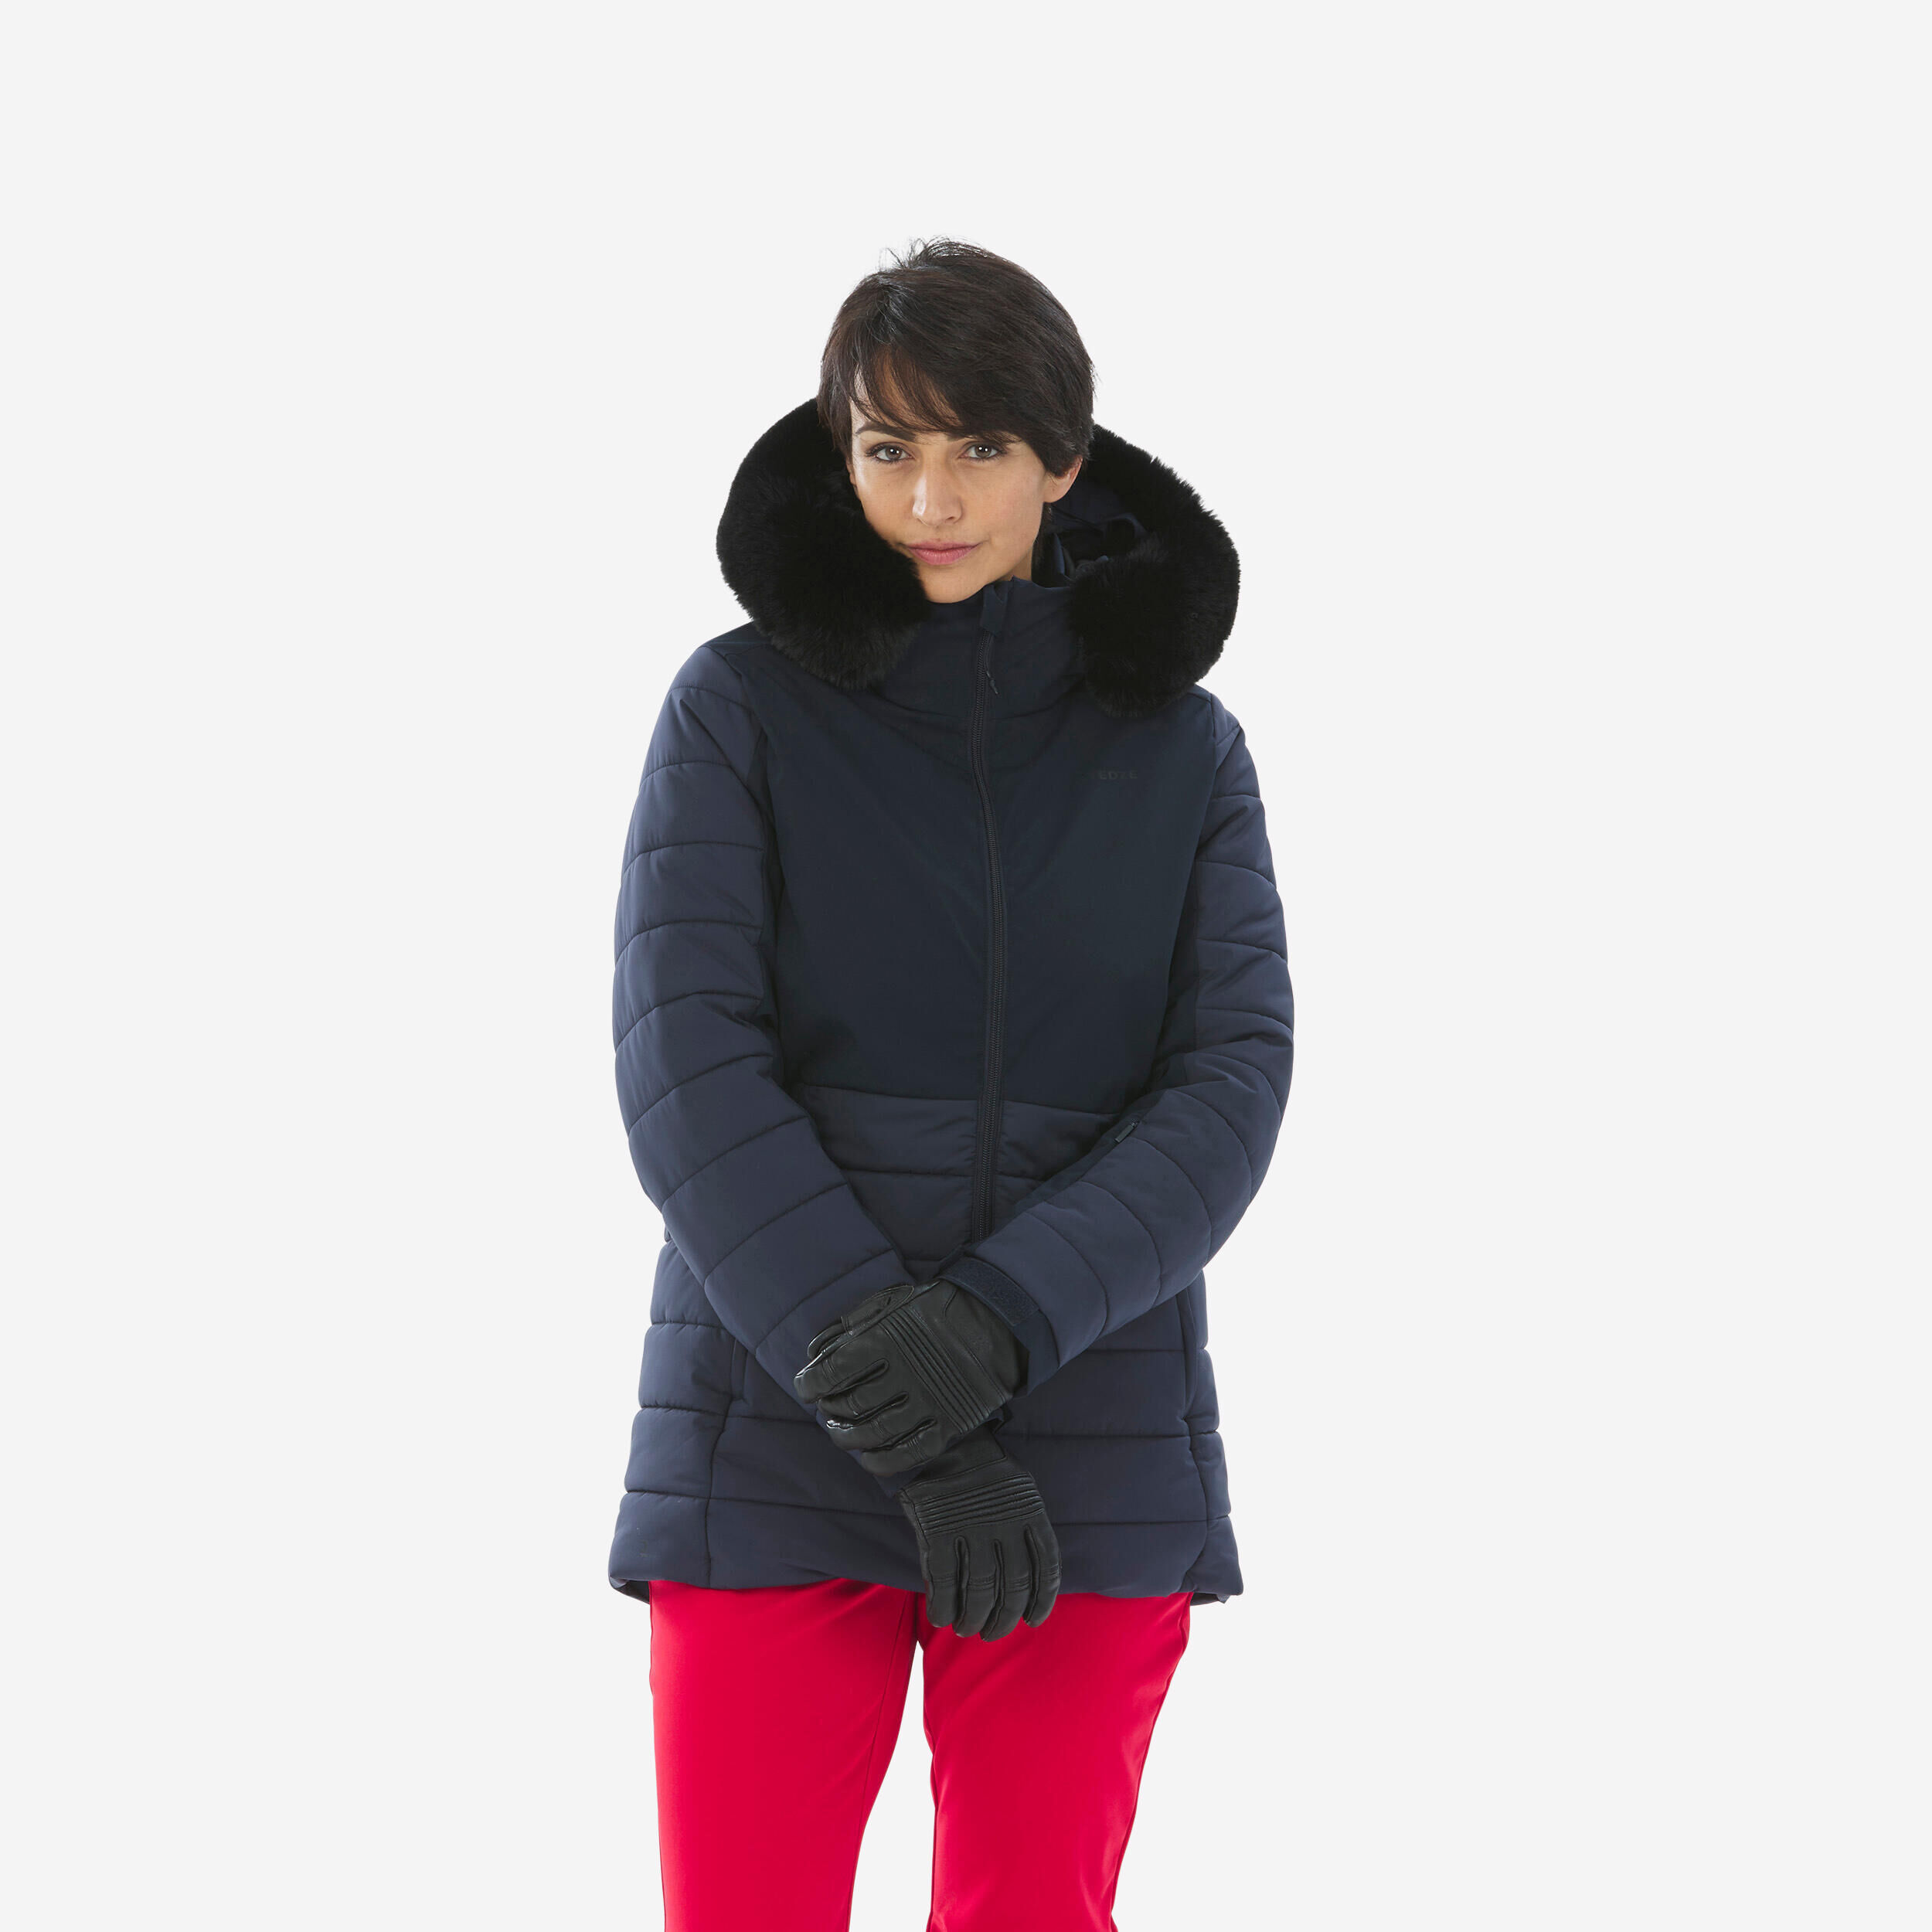 WEDZE Women’s Mid-Length Warm Ski Jacket 100 - Navy Blue